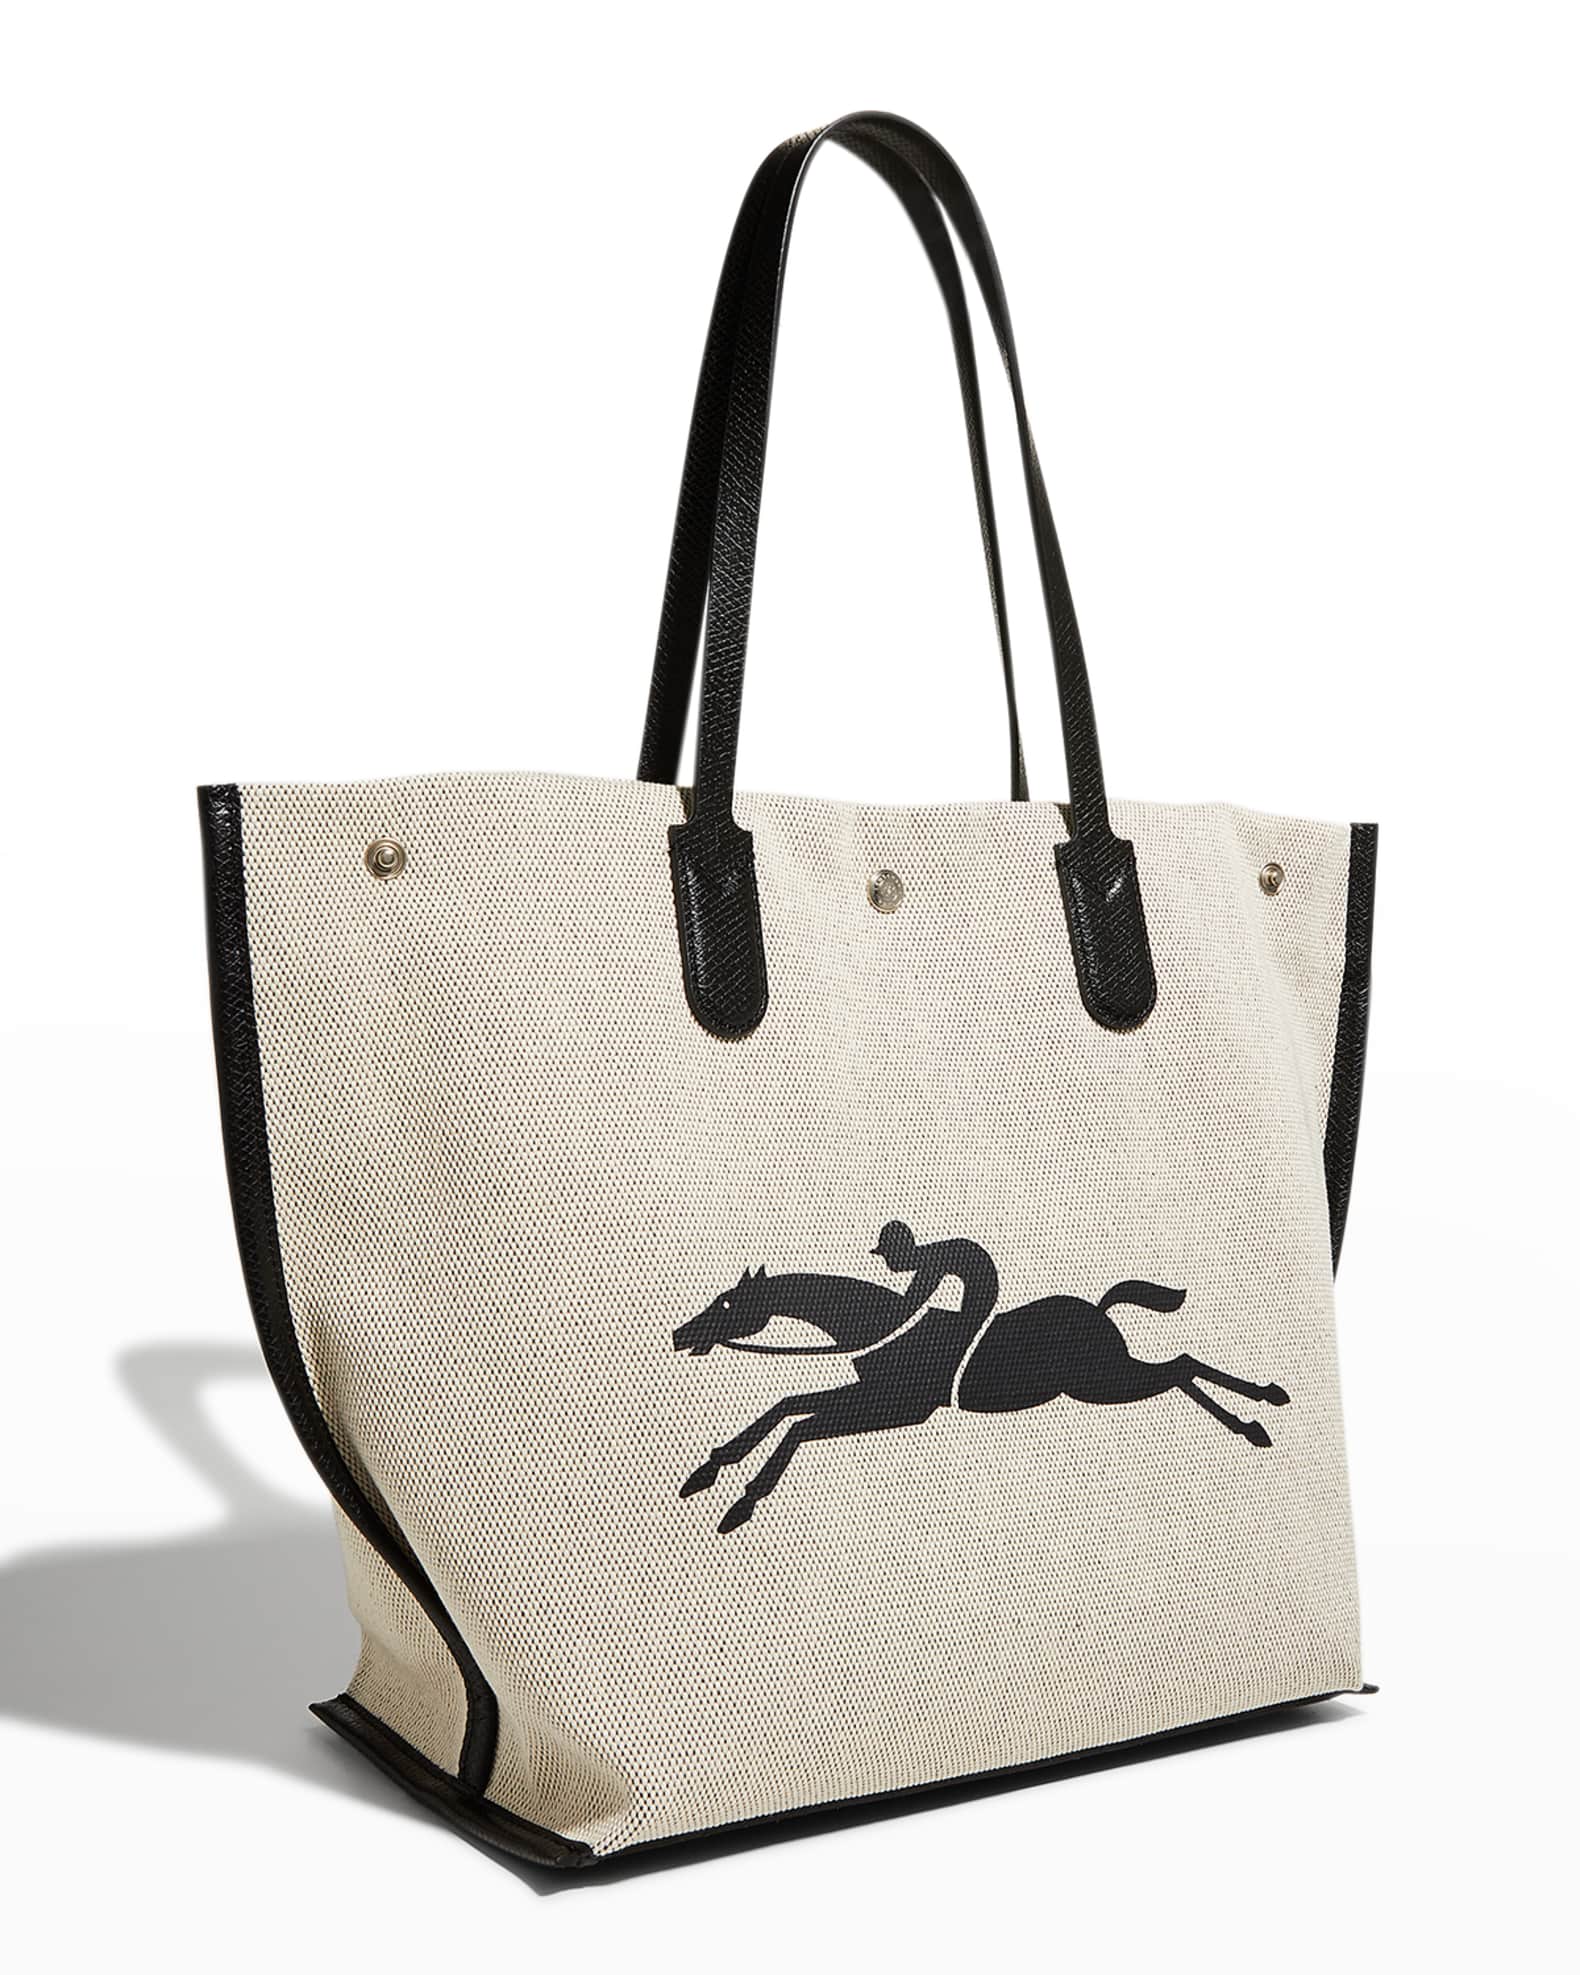 Longchamp Horse Logo Essential Canvas Tote Bag | Neiman Marcus